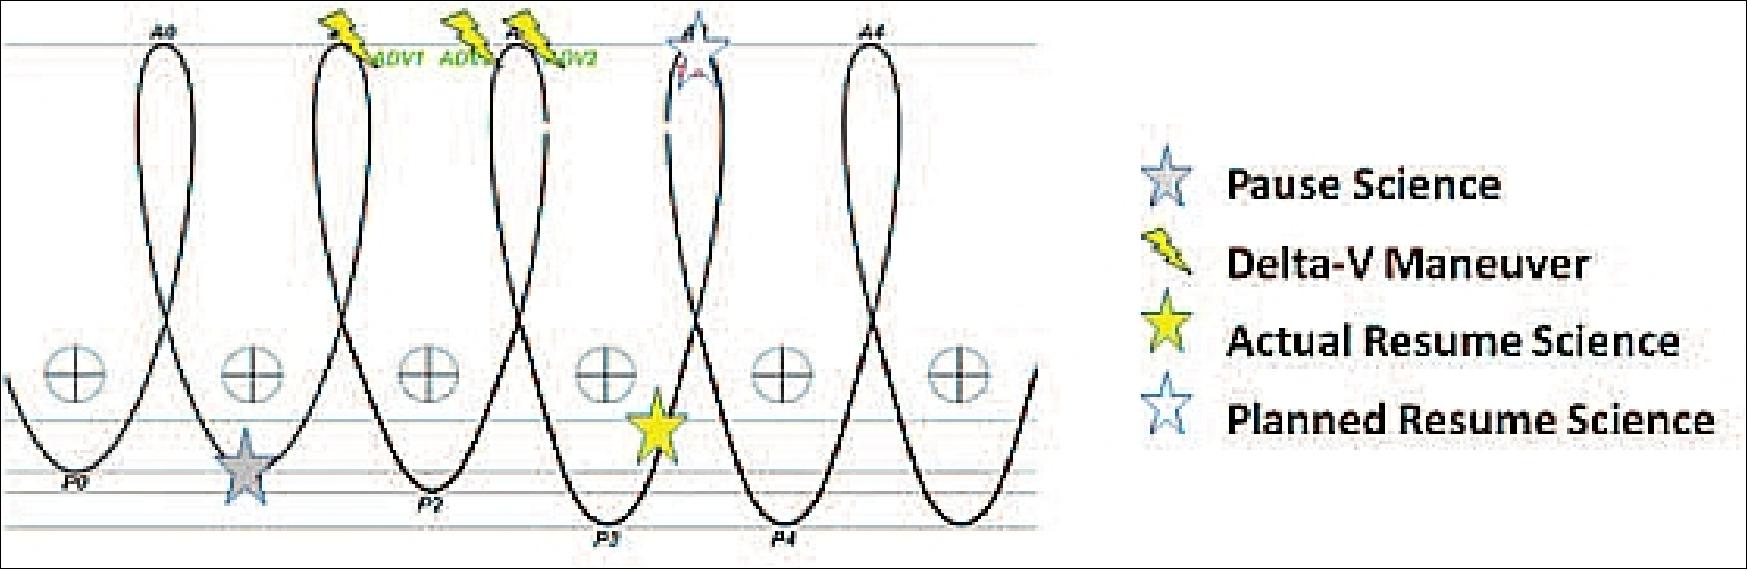 Figure 14: Maneuver timeline (Image credit: IBEX team)